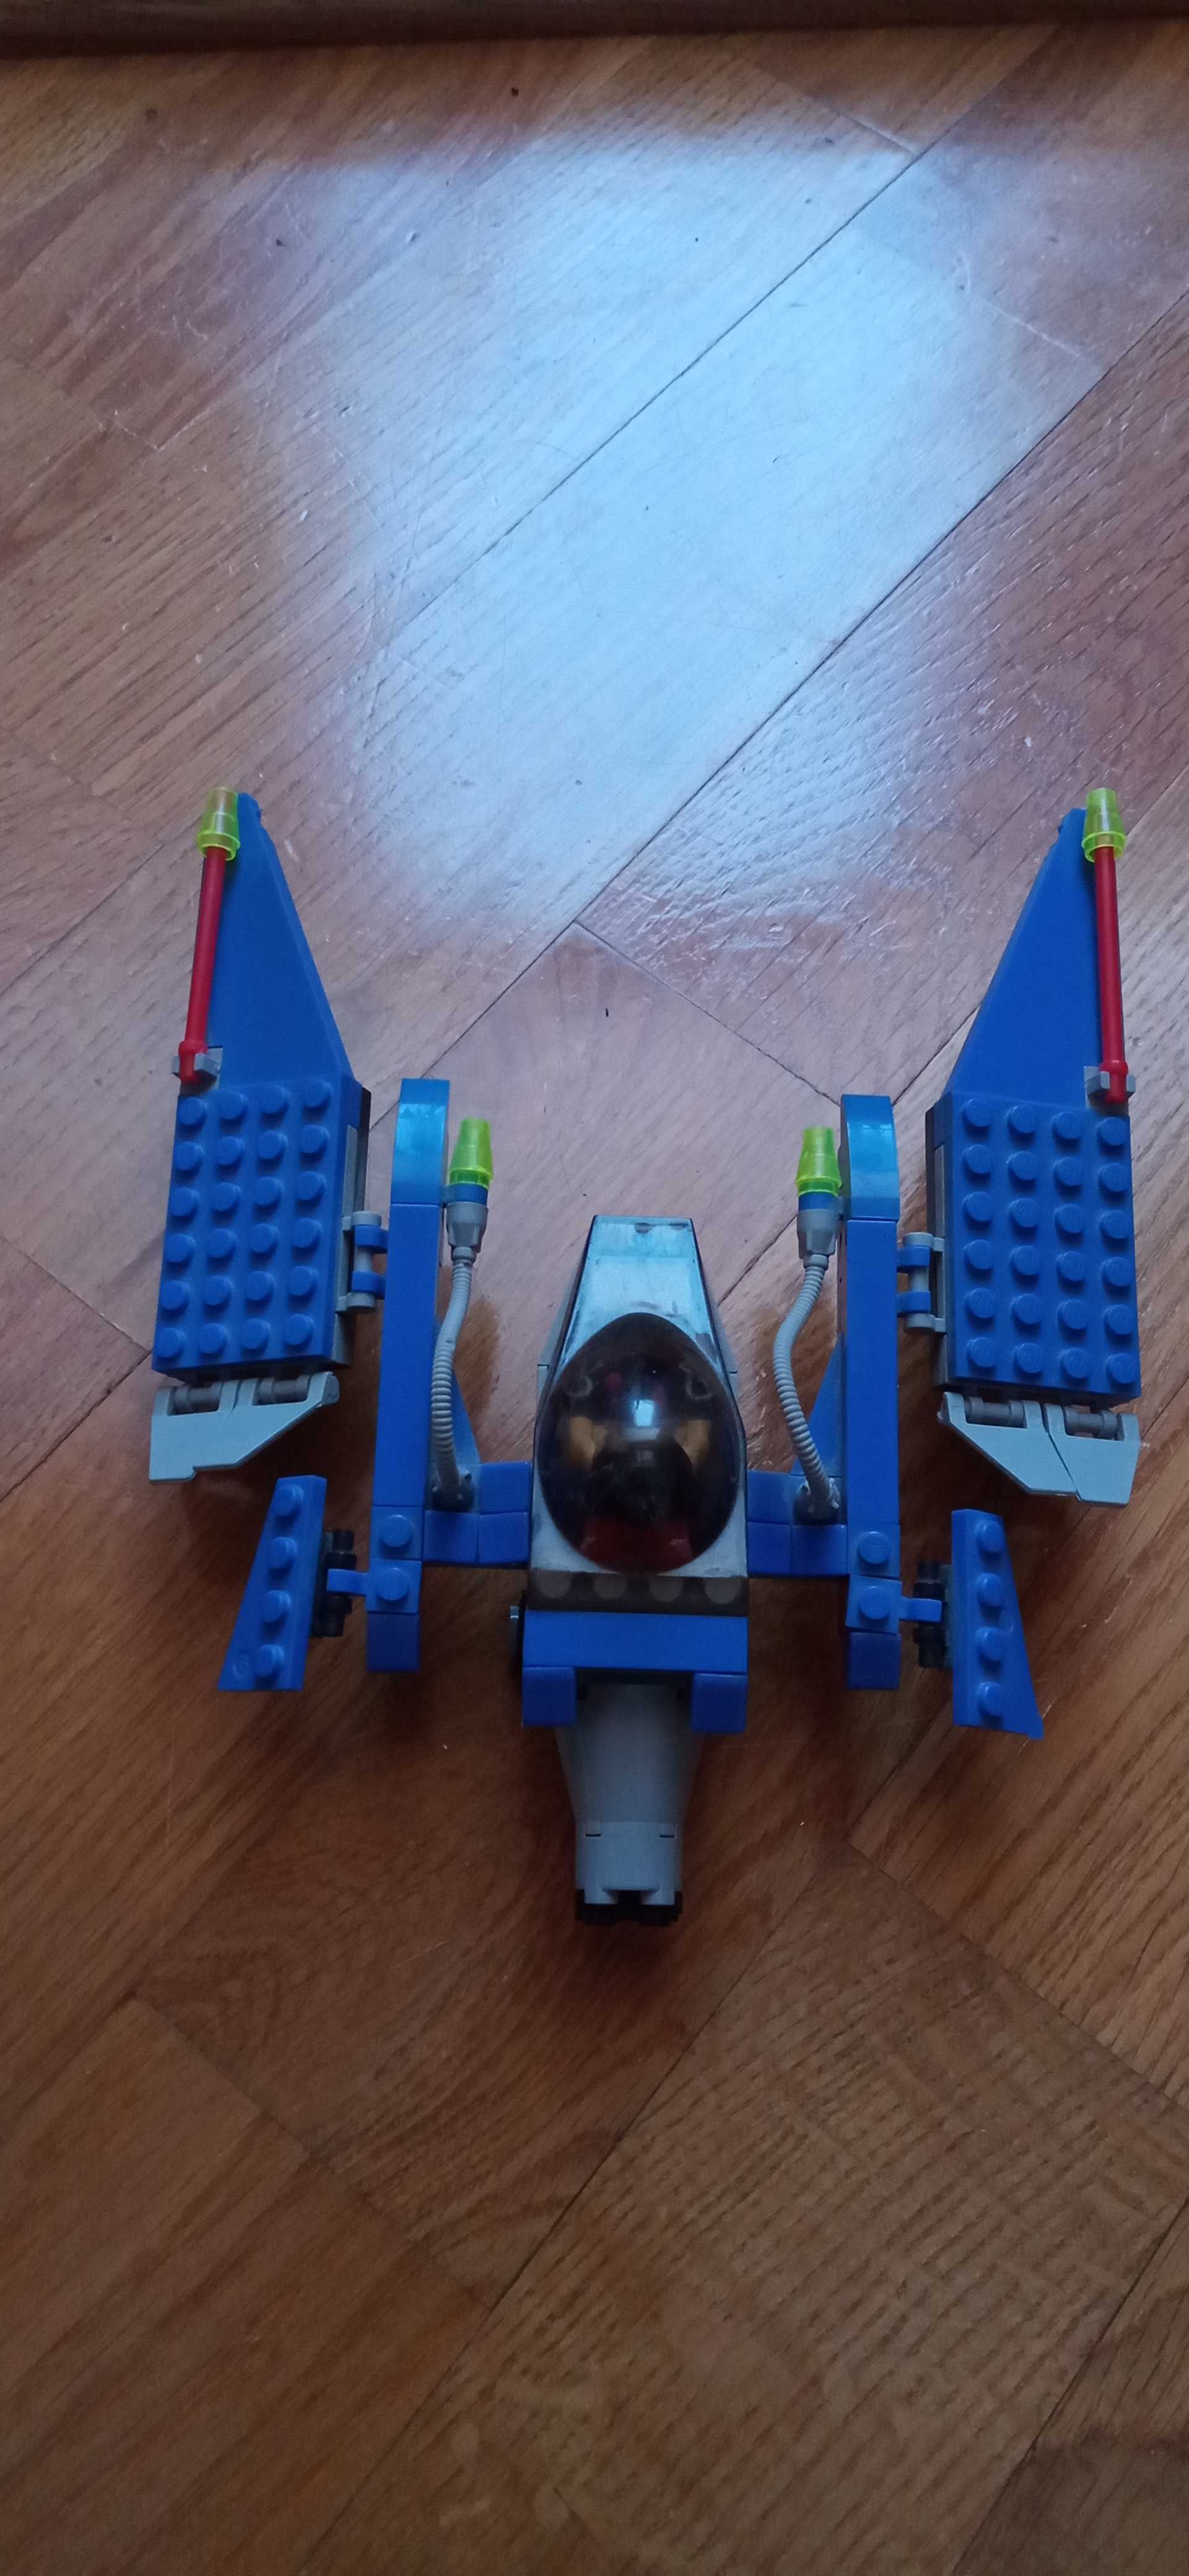 Іграшка-конструктор "LEGO".